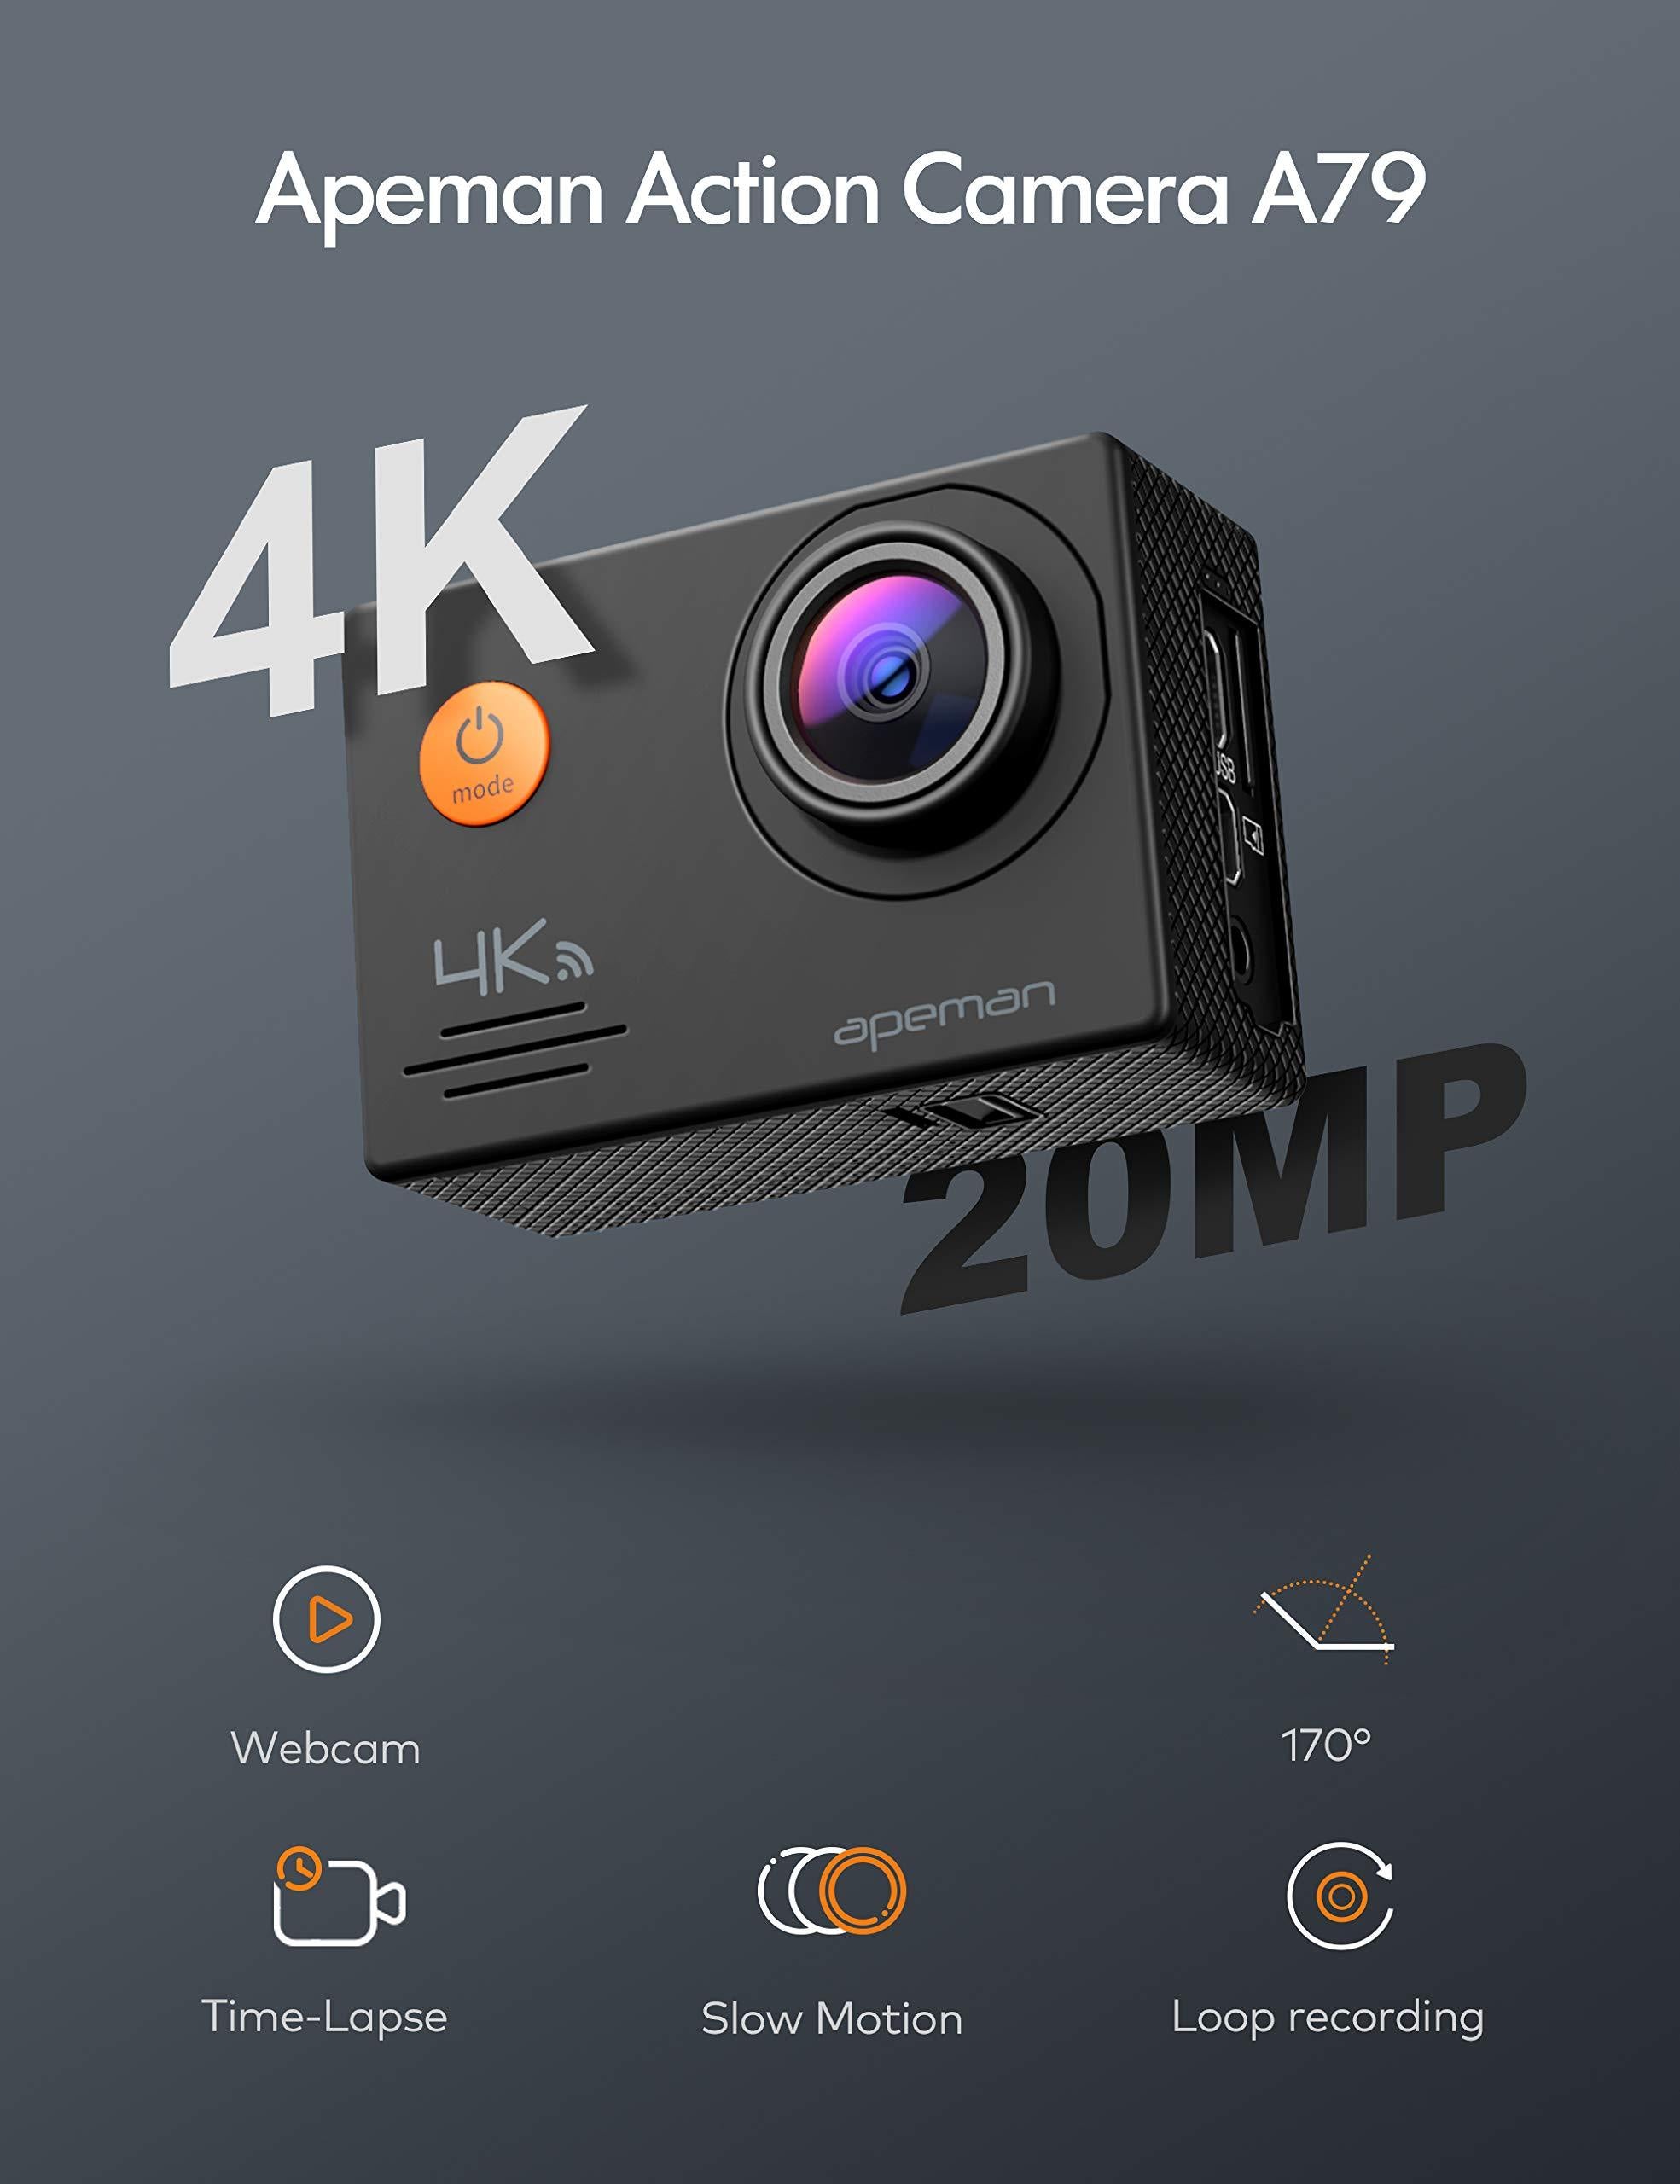 apeman A79 Action Camera